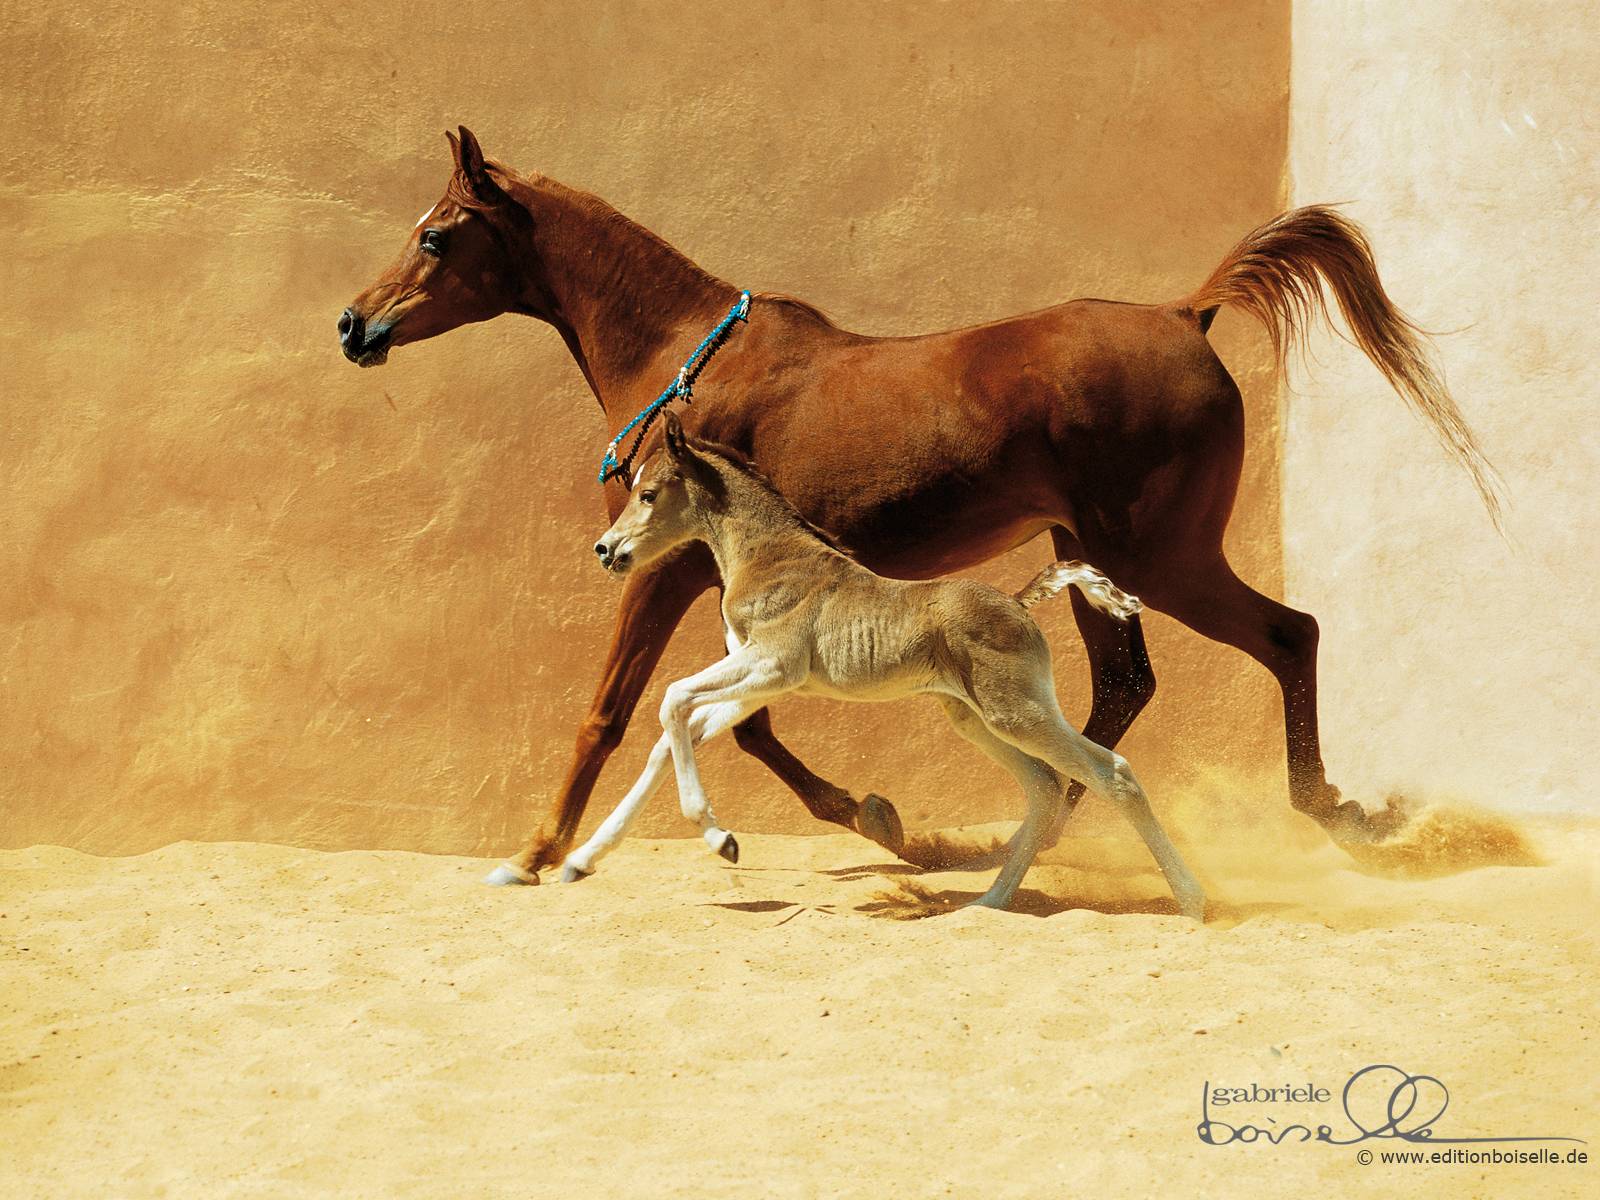 Arabian Horse HD Wallpaper. Horse Desktop Wallpaper. Cool